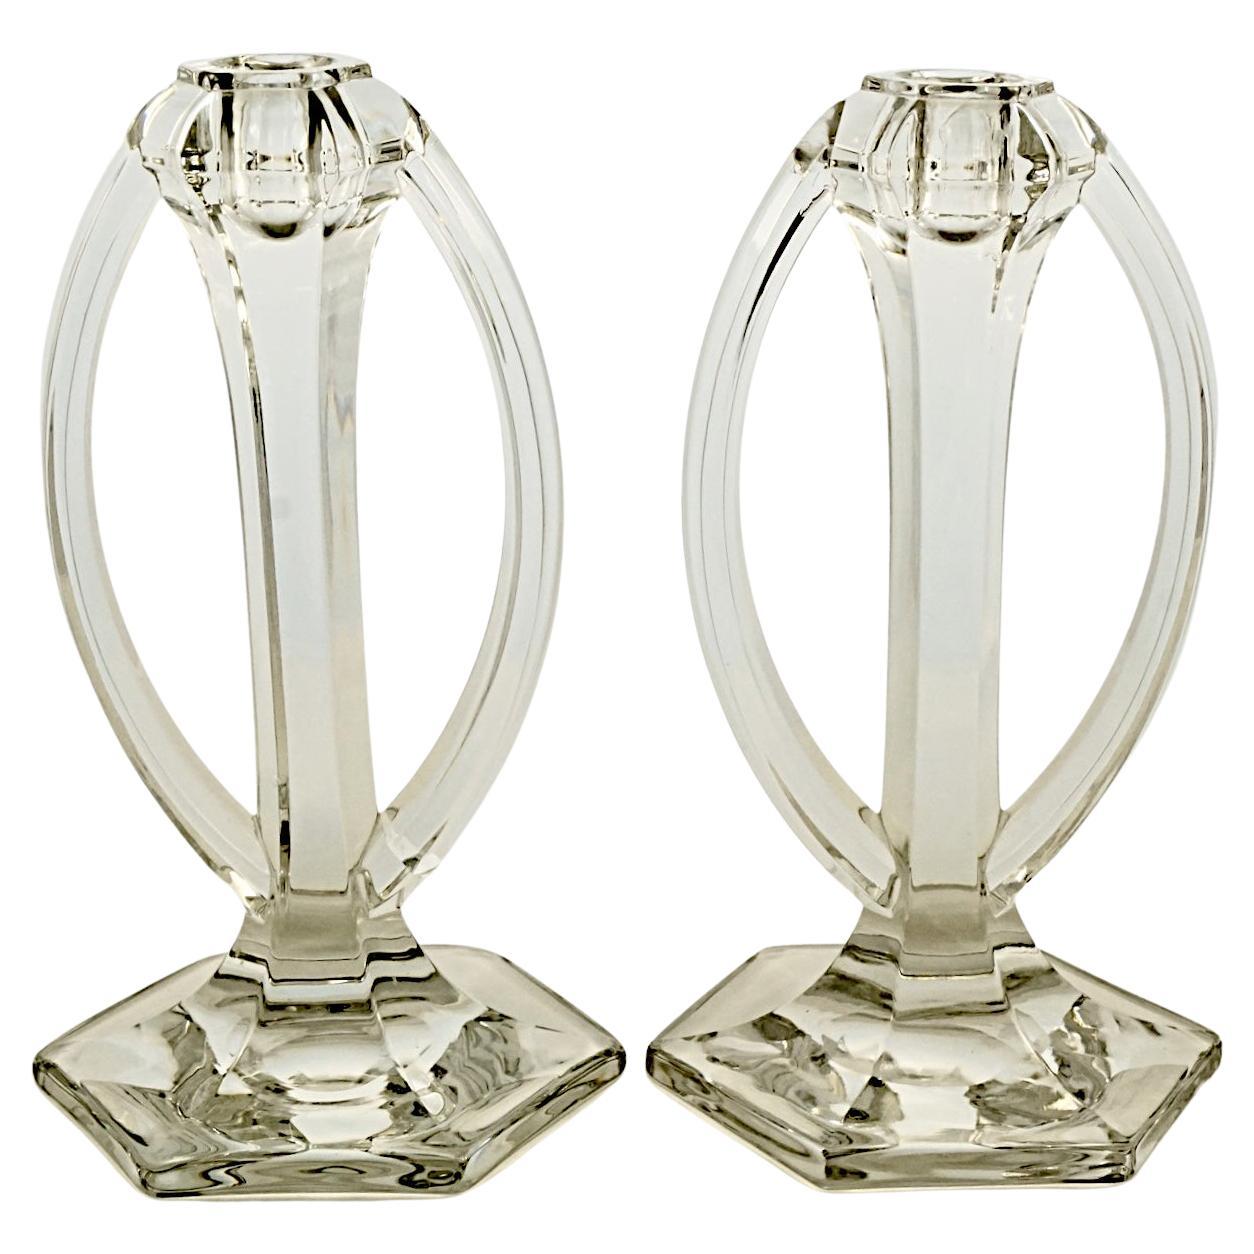 Paire de chandeliers en verre de style Chippendale, vers 1920